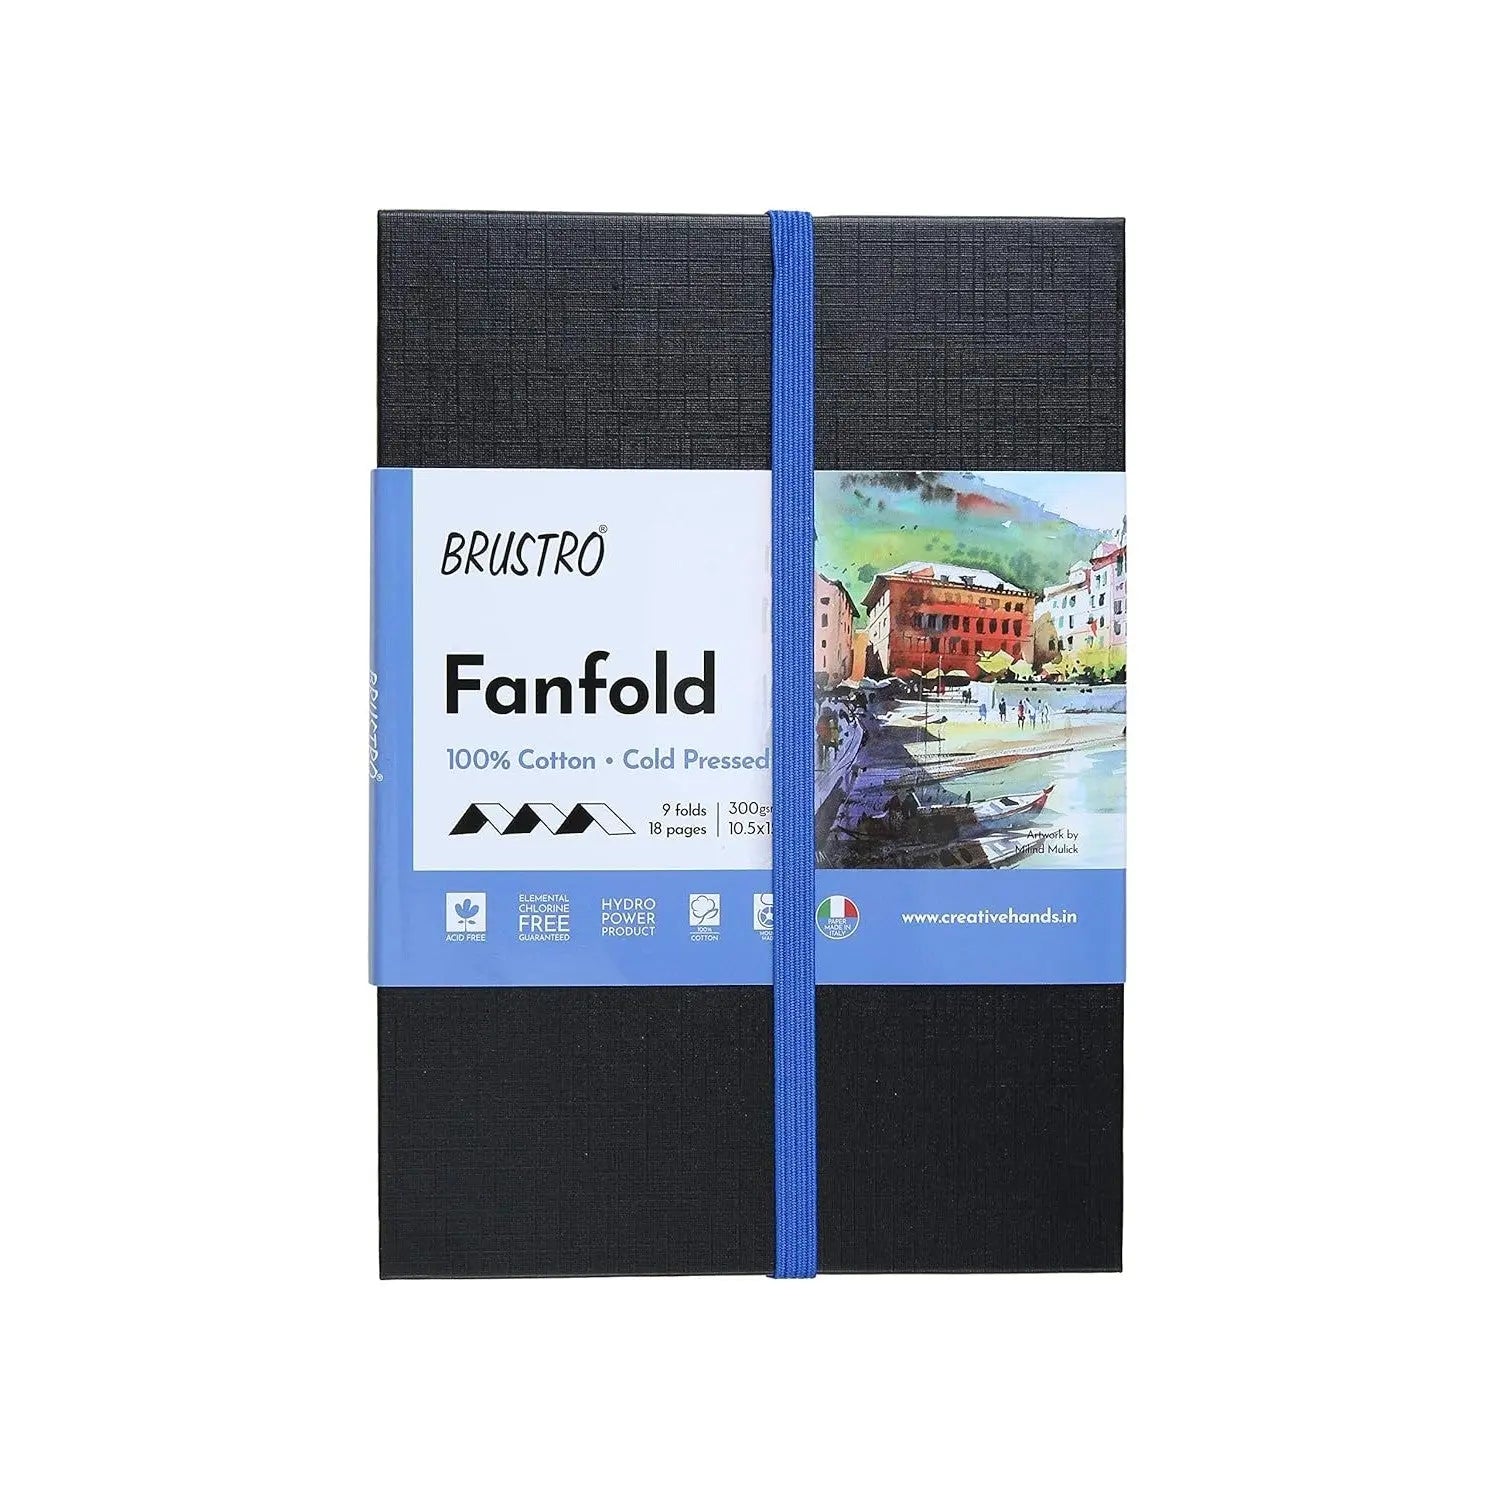 Brustro Artists Fanfold Watercolour Book 100% Cotton Mouldmade 300 GSM,10.5x15cm Brustro